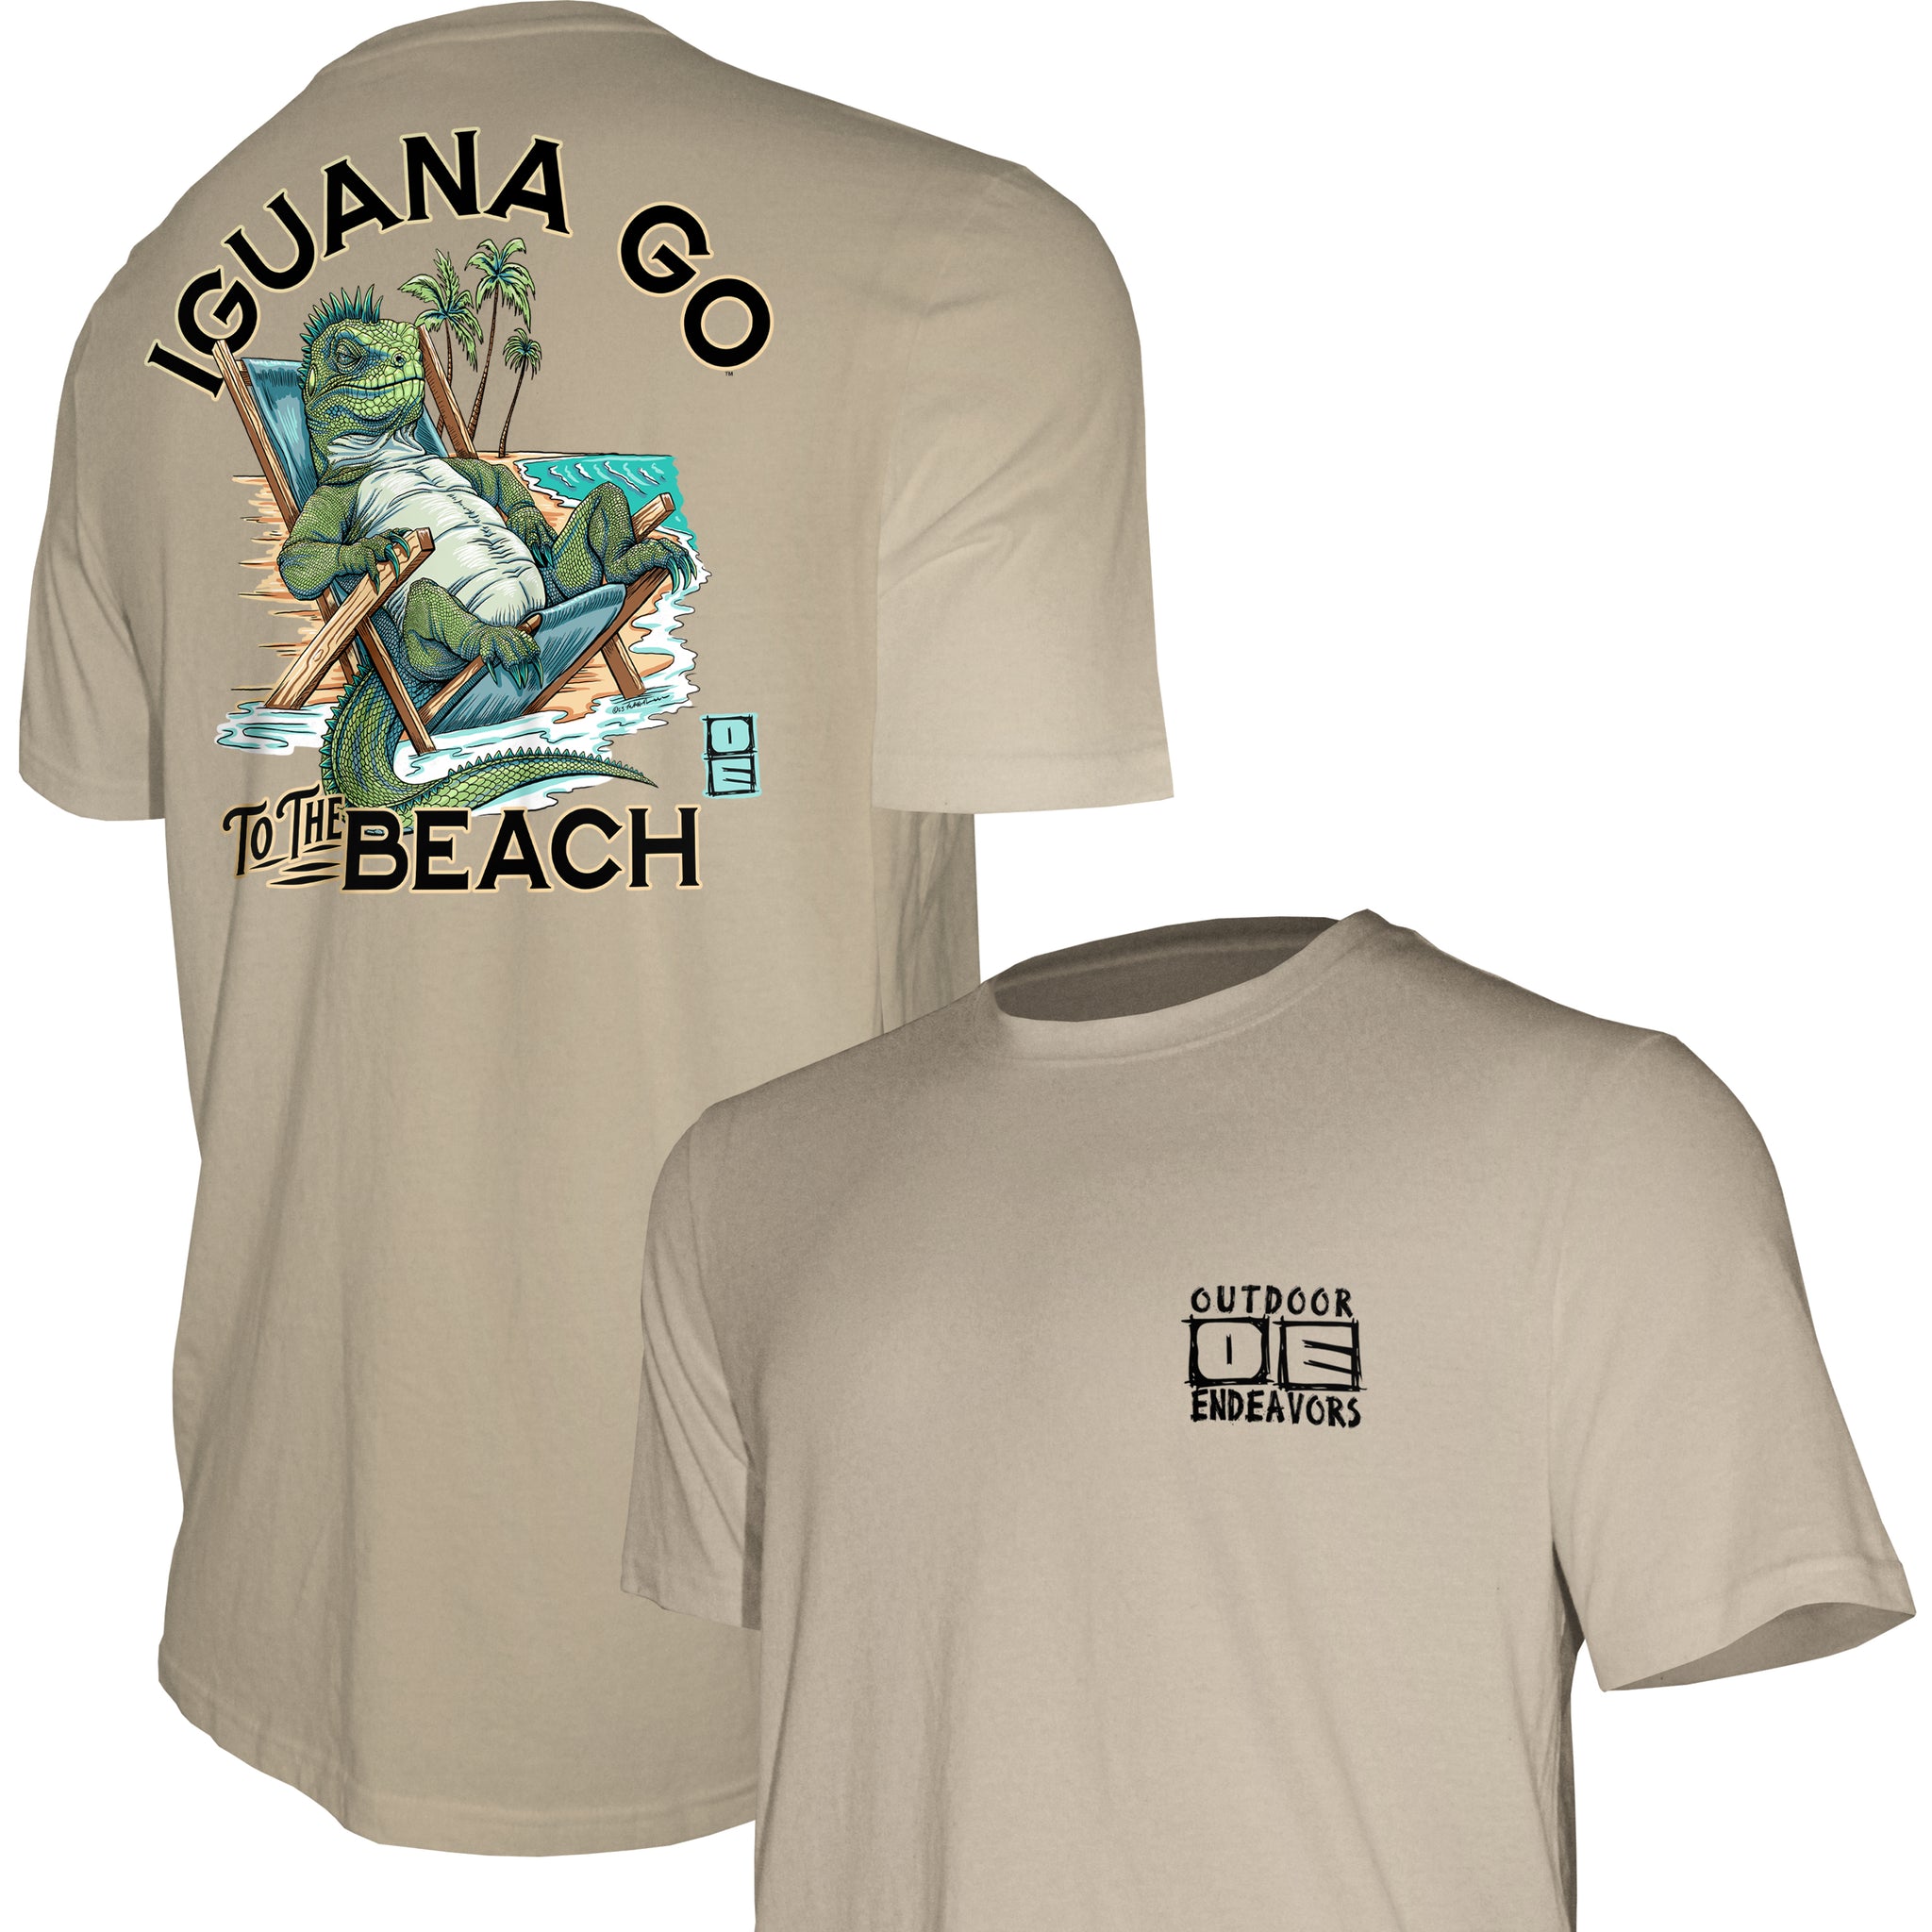 Outdoor Endeavors Attitude- American Made Tee - Iguana Go to the Beach